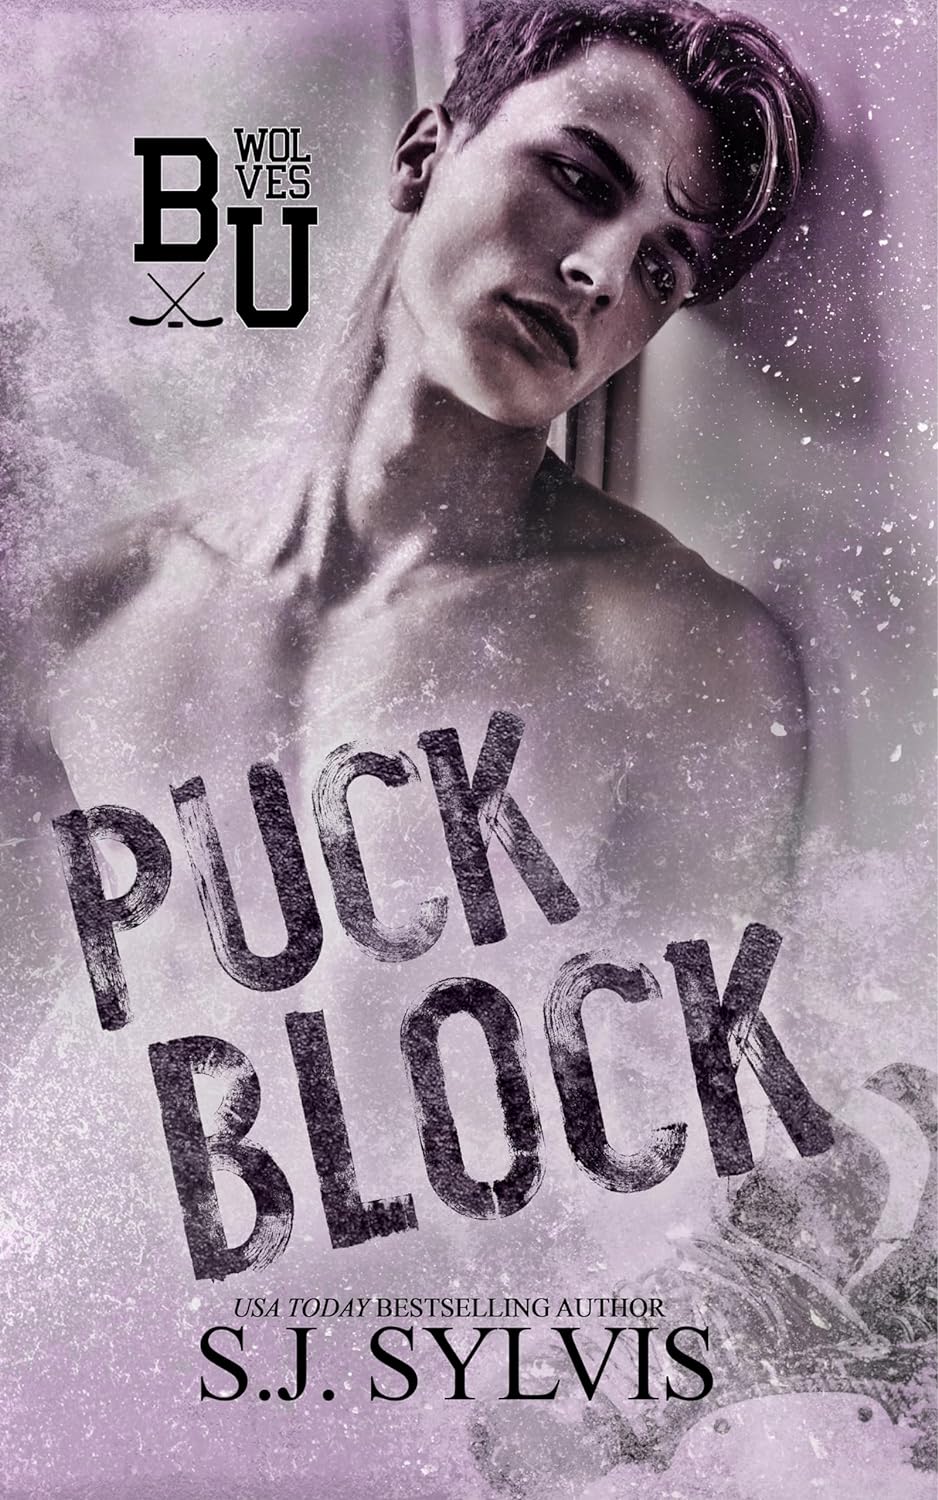 Puck Block